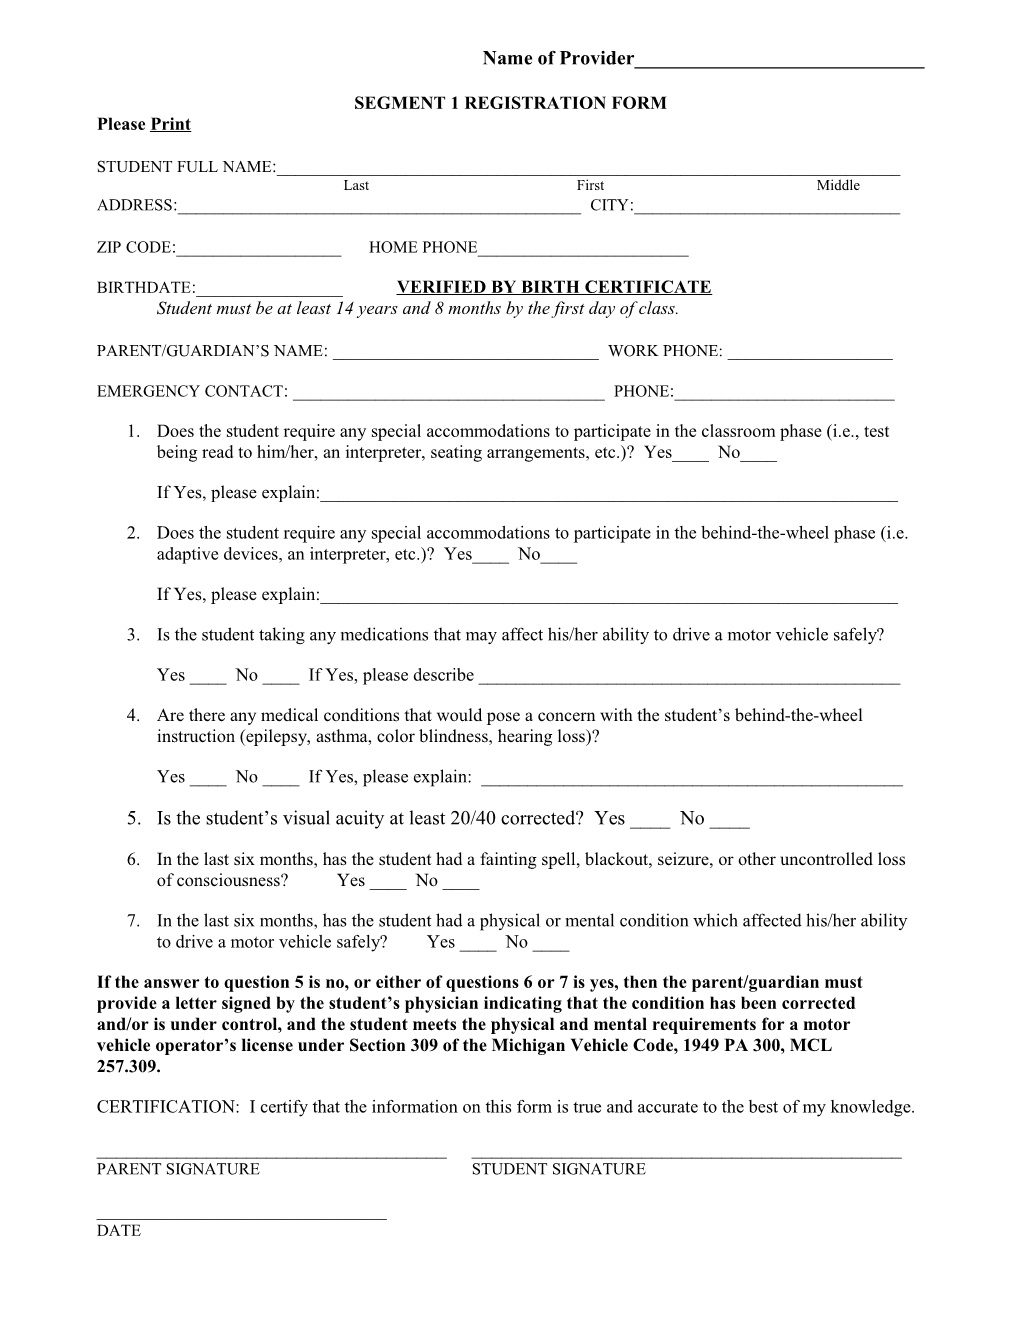 Segment 1 Registration Form